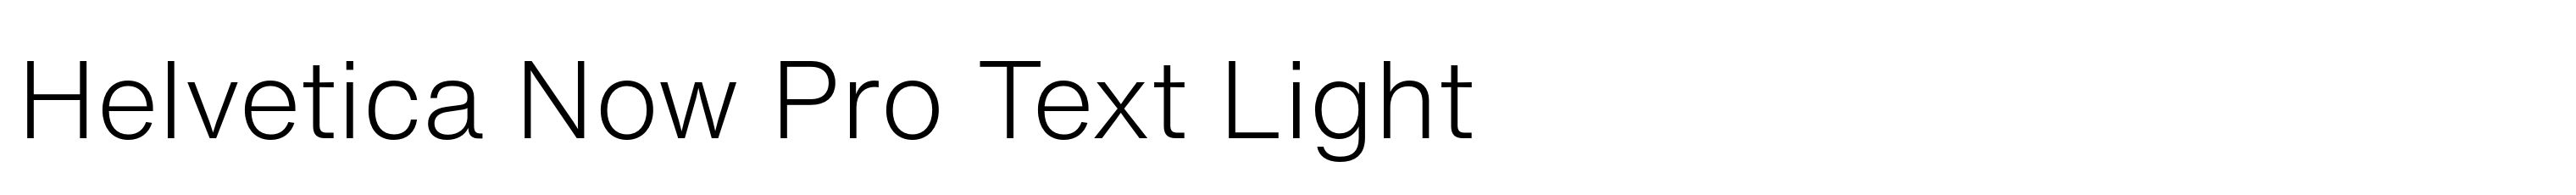 Helvetica Now Pro Text Light